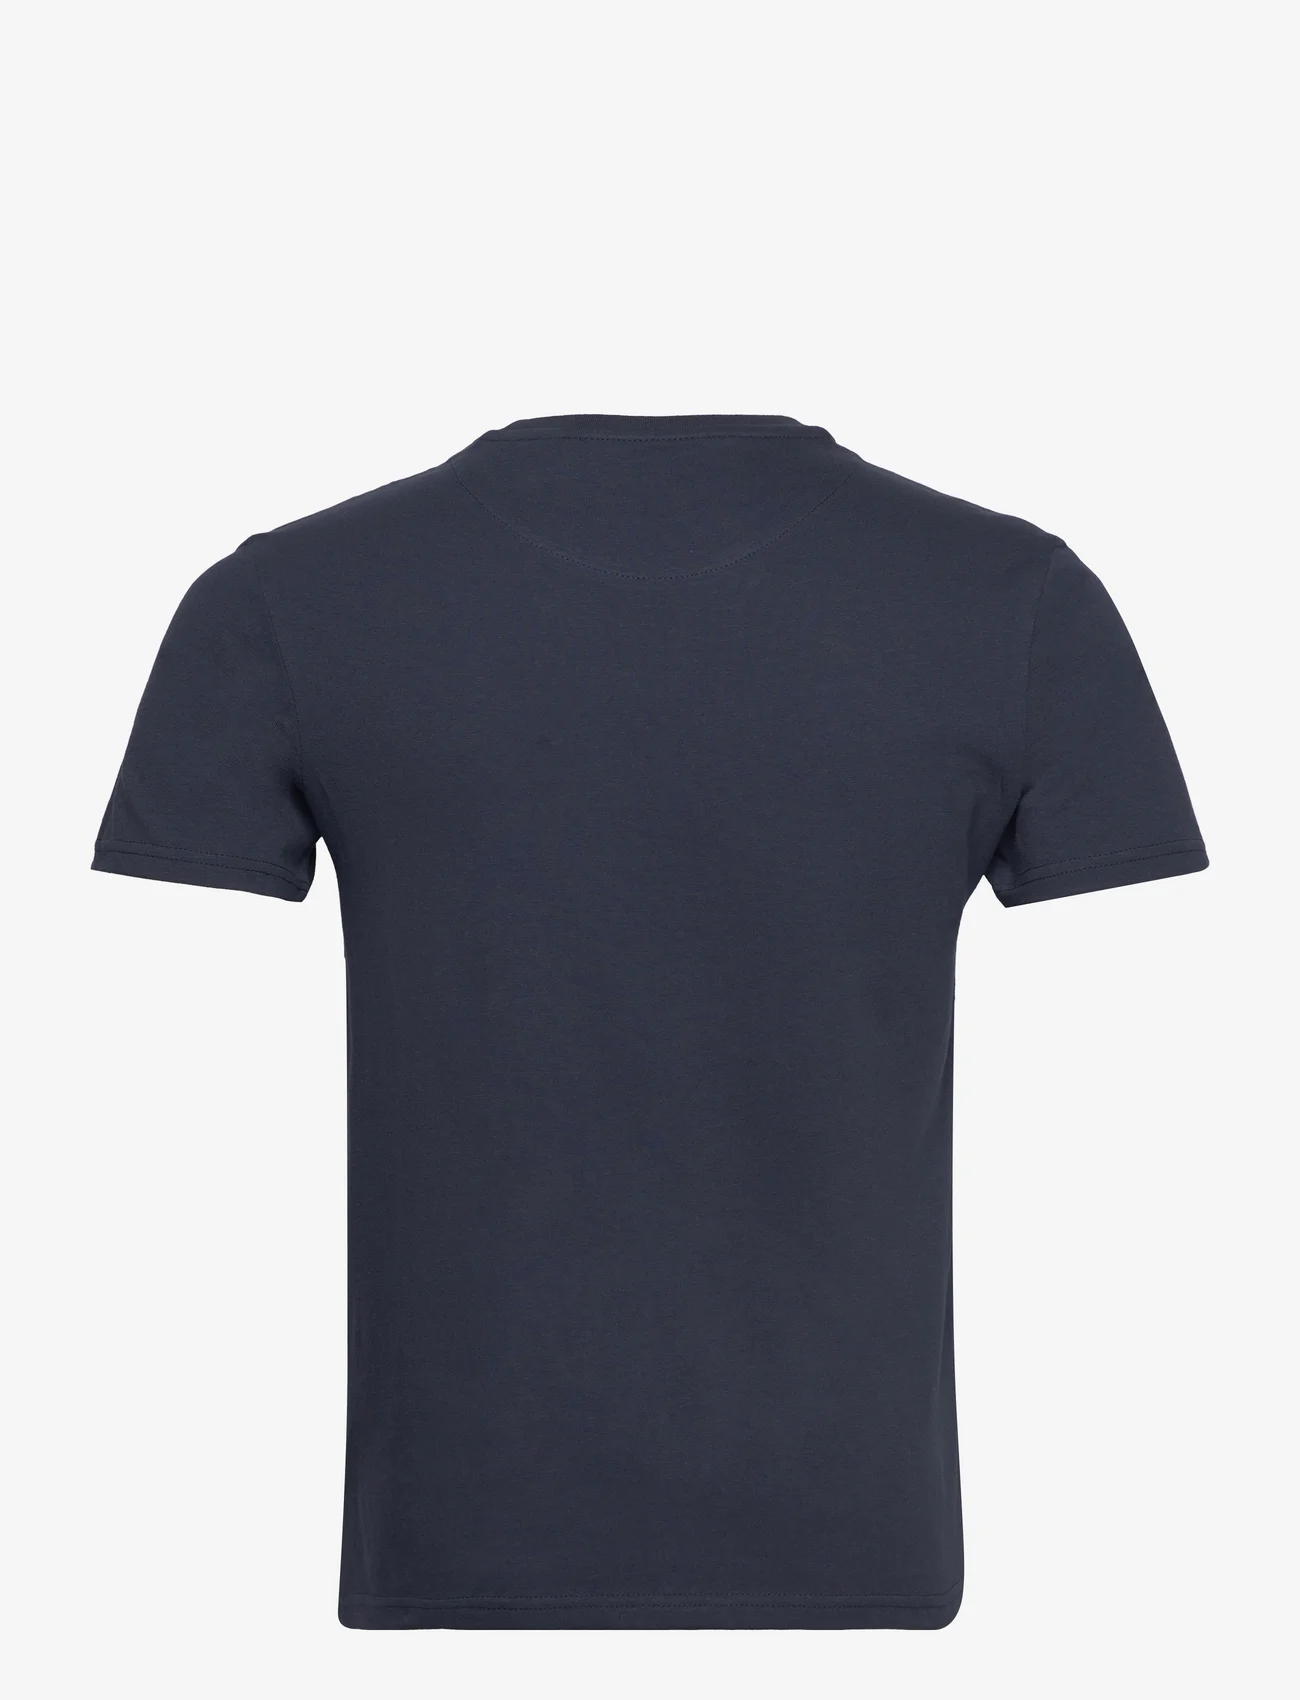 Lyle & Scott - Plain T-Shirt - laveste priser - dark navy - 1